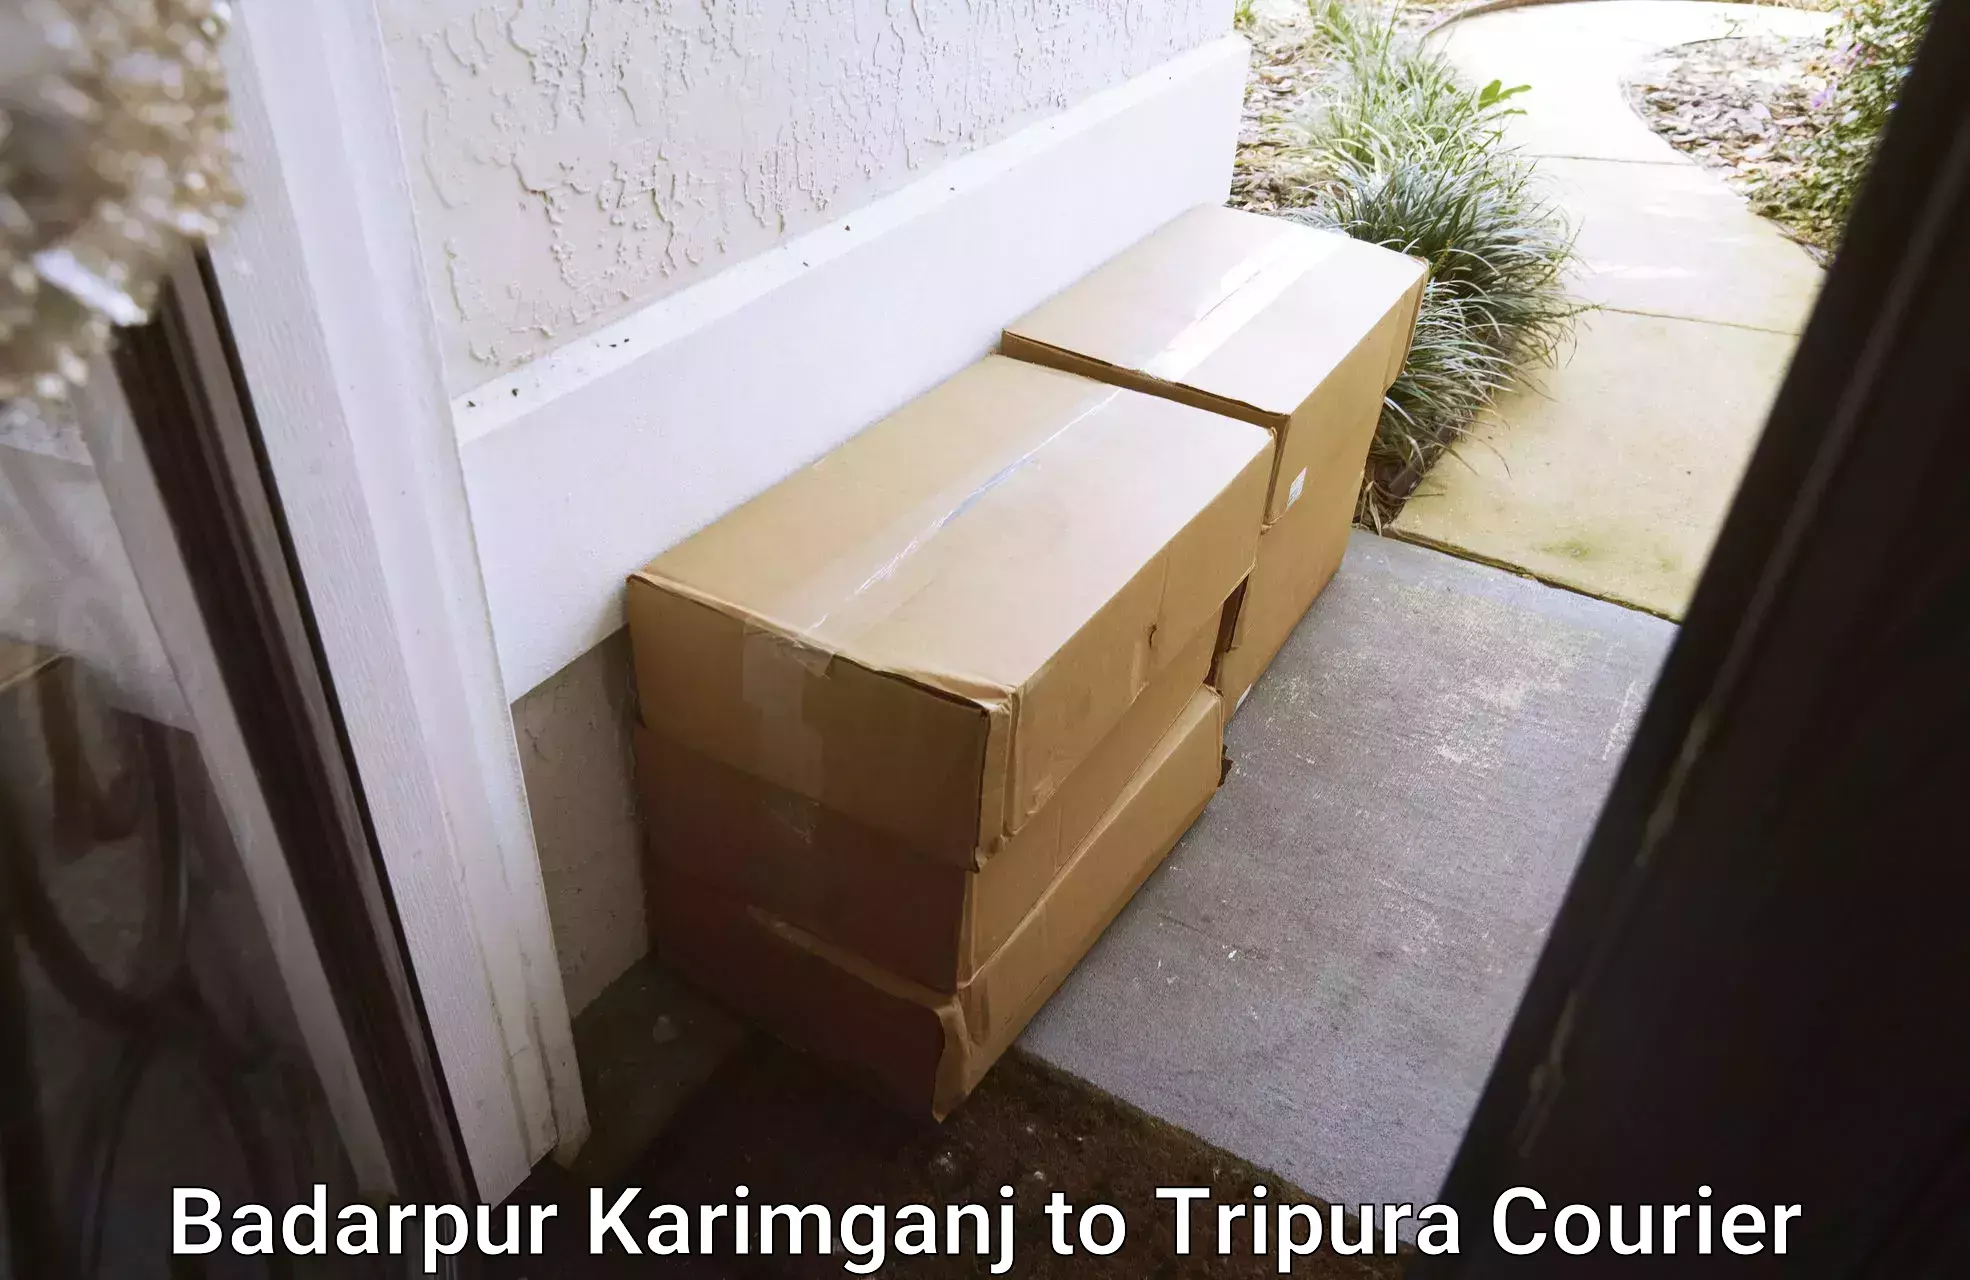 Emergency parcel delivery in Badarpur Karimganj to West Tripura